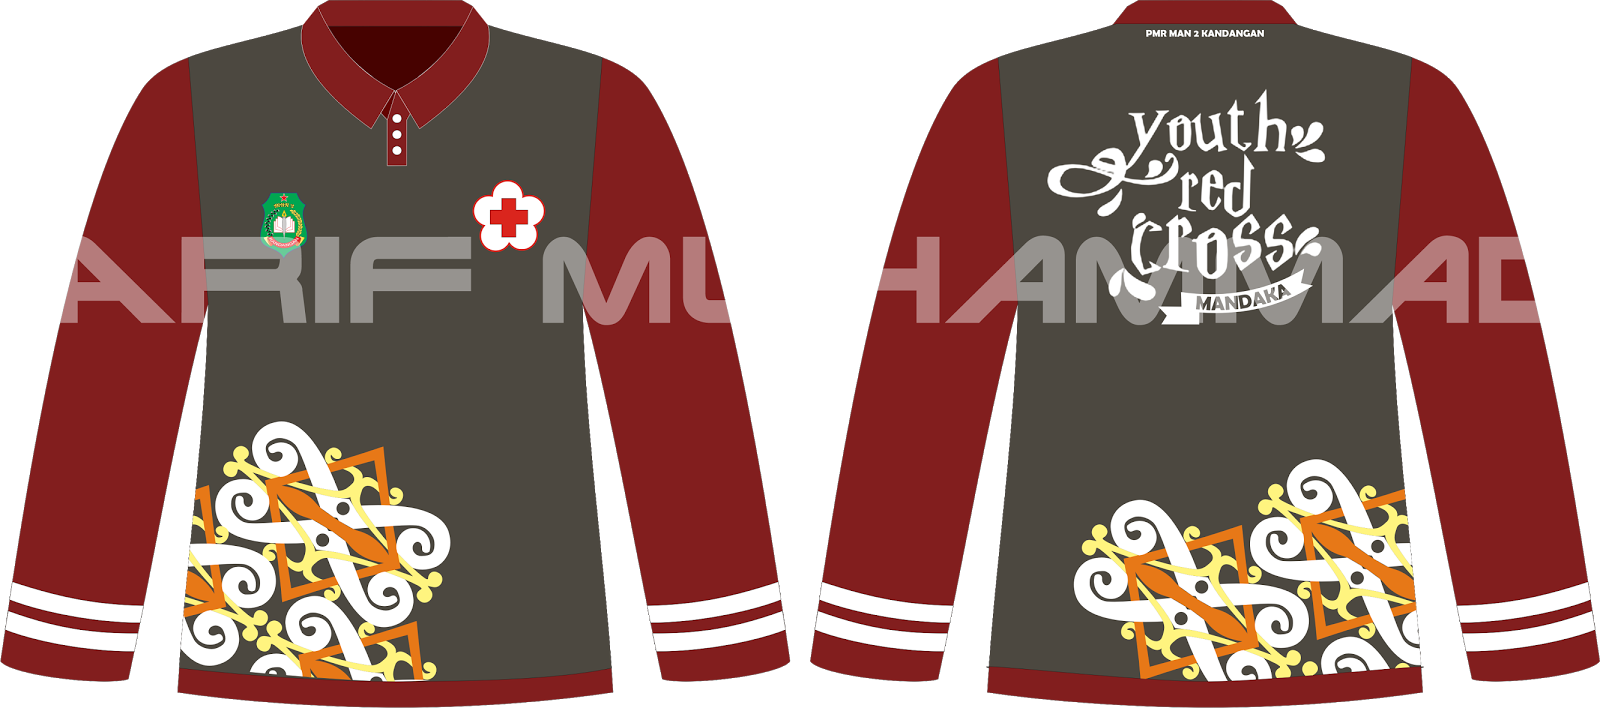 Arif Muhammad Contoh Desain Baju Lapangan PMR 